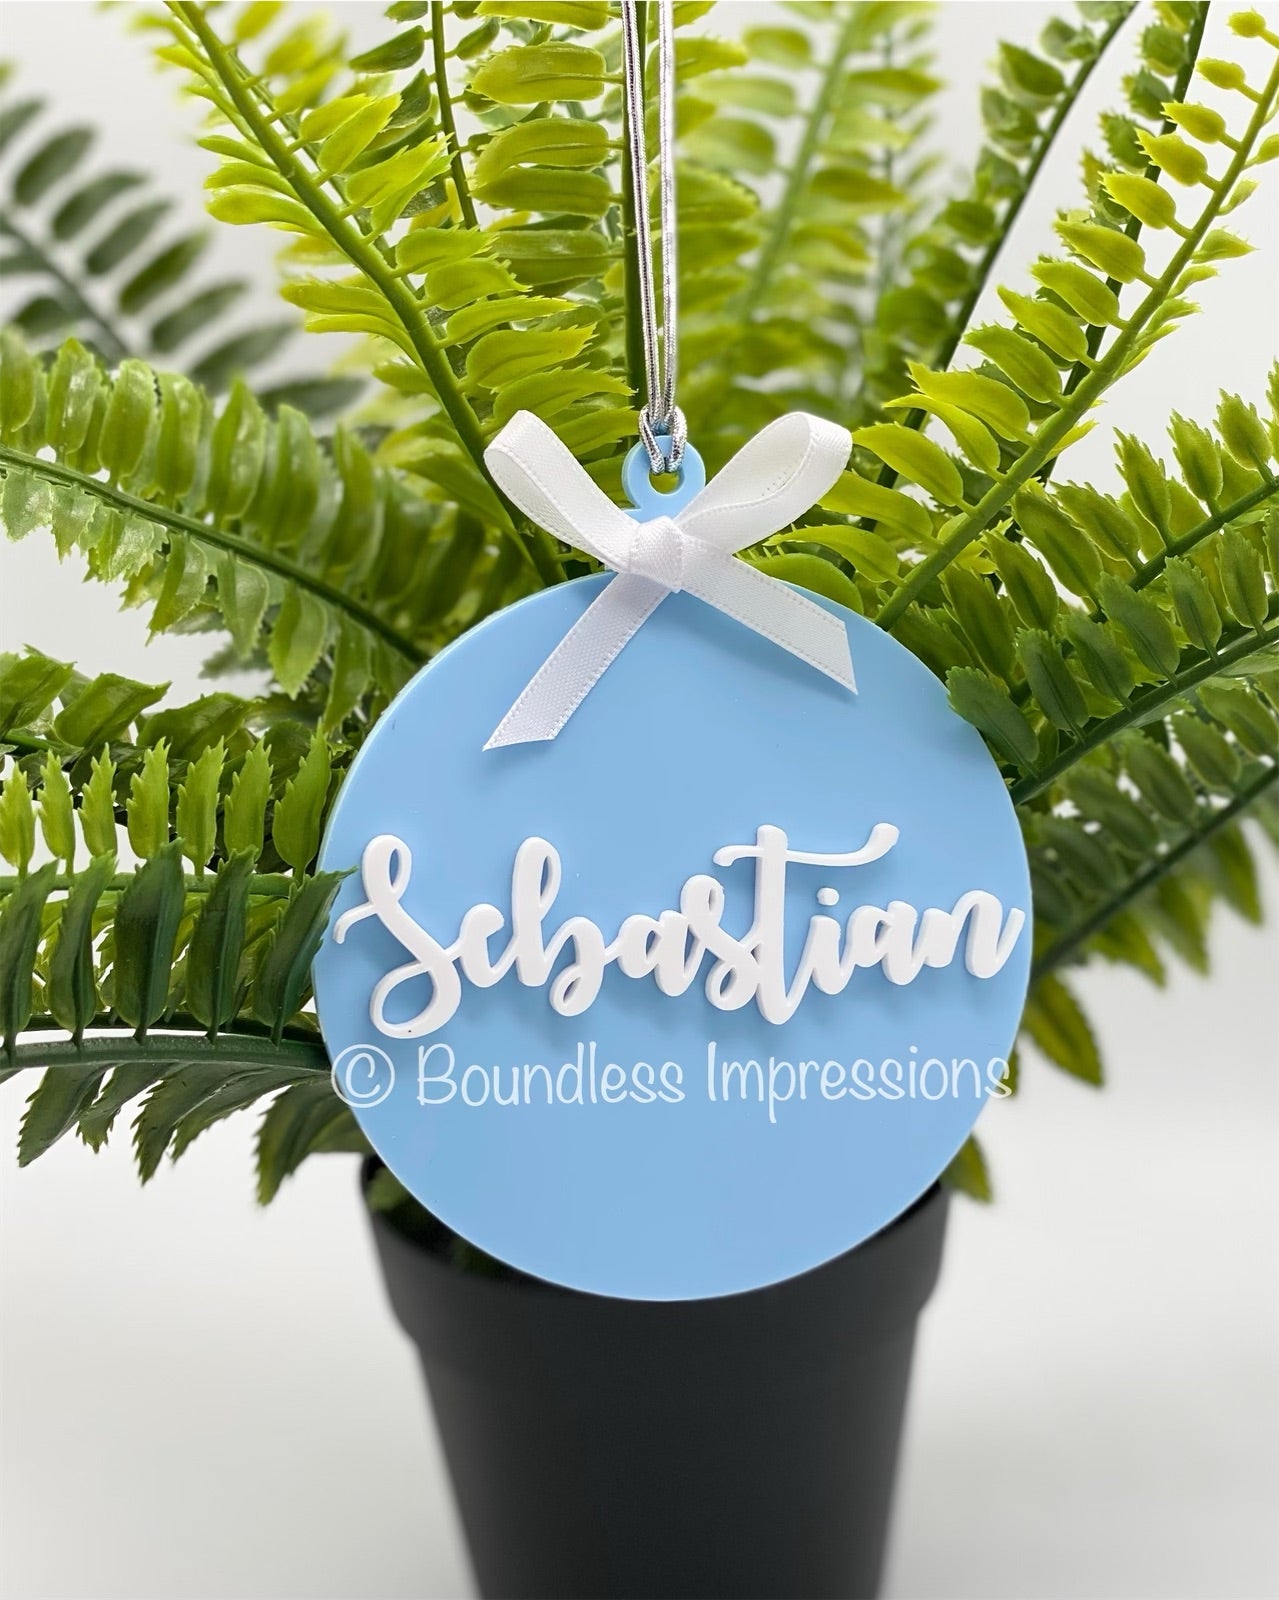 Personalised Acrylic - Christmas Tree Ornaments